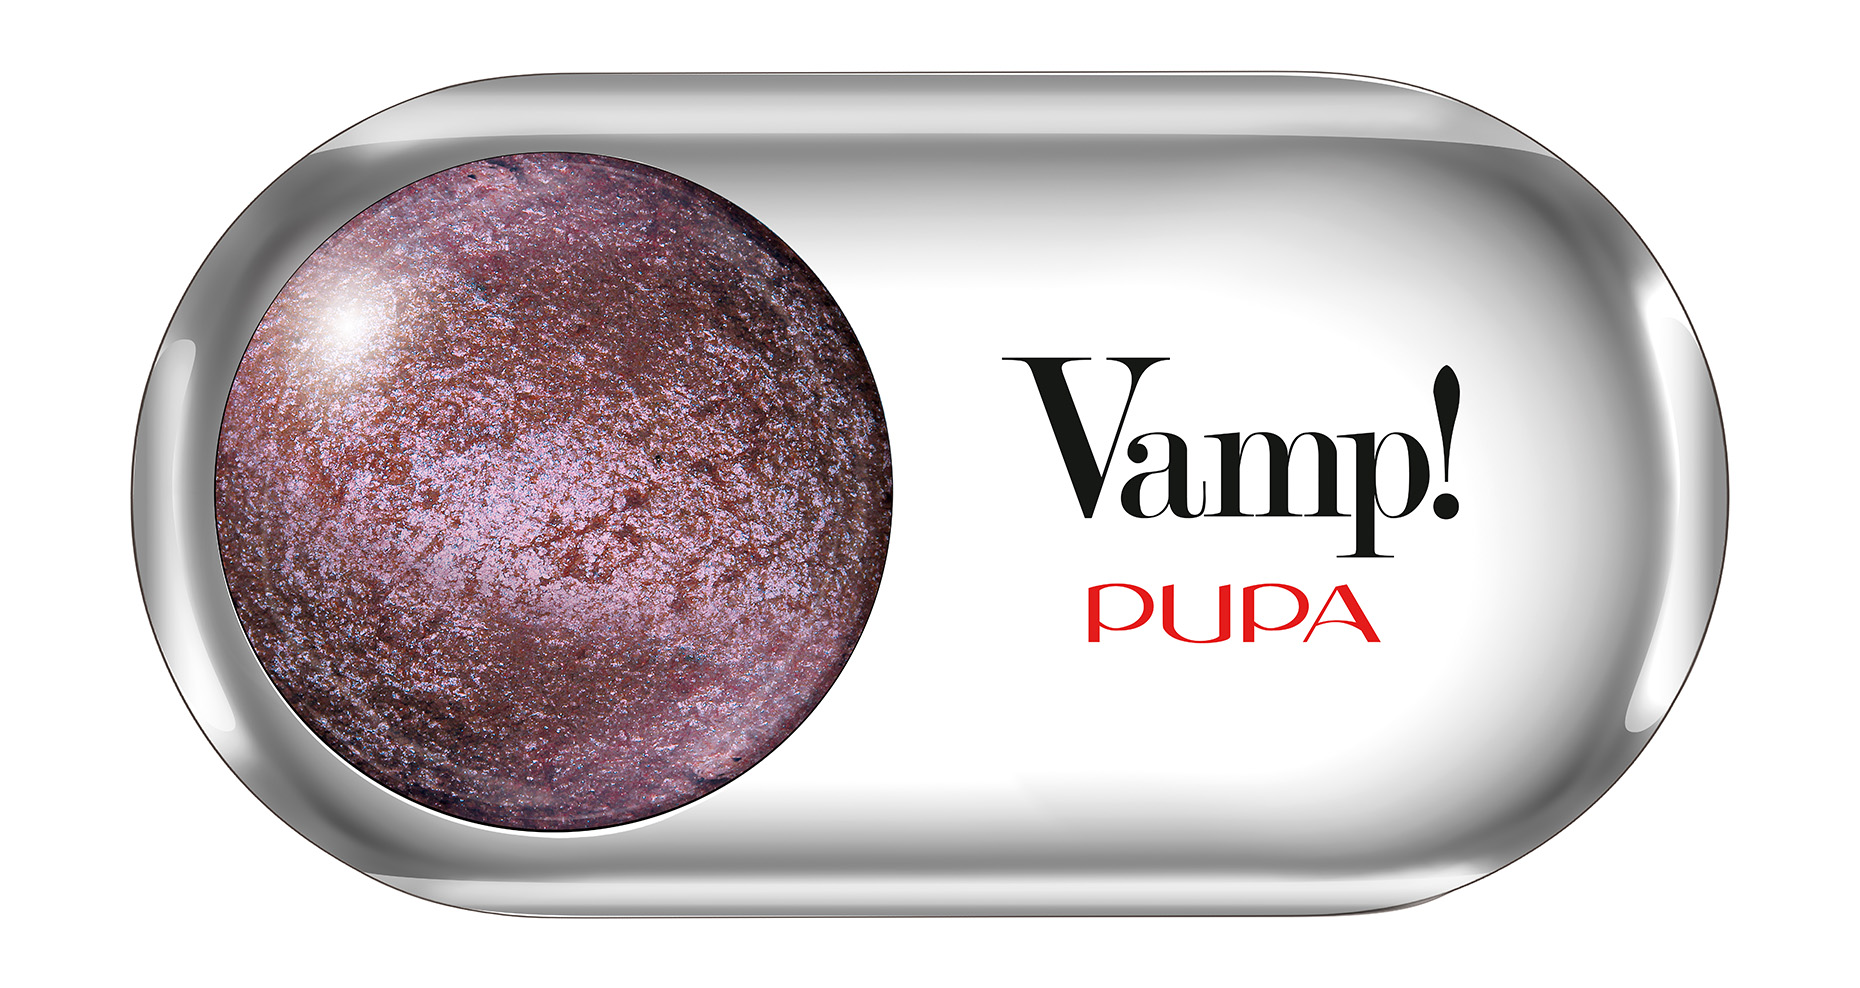 Запеченные тени для век Pupa Vamp! Wet&Dry Eyeshadow104 DEEP PLUM жидкие тени для век liquid eyeshadows оттенок 04 plum wine